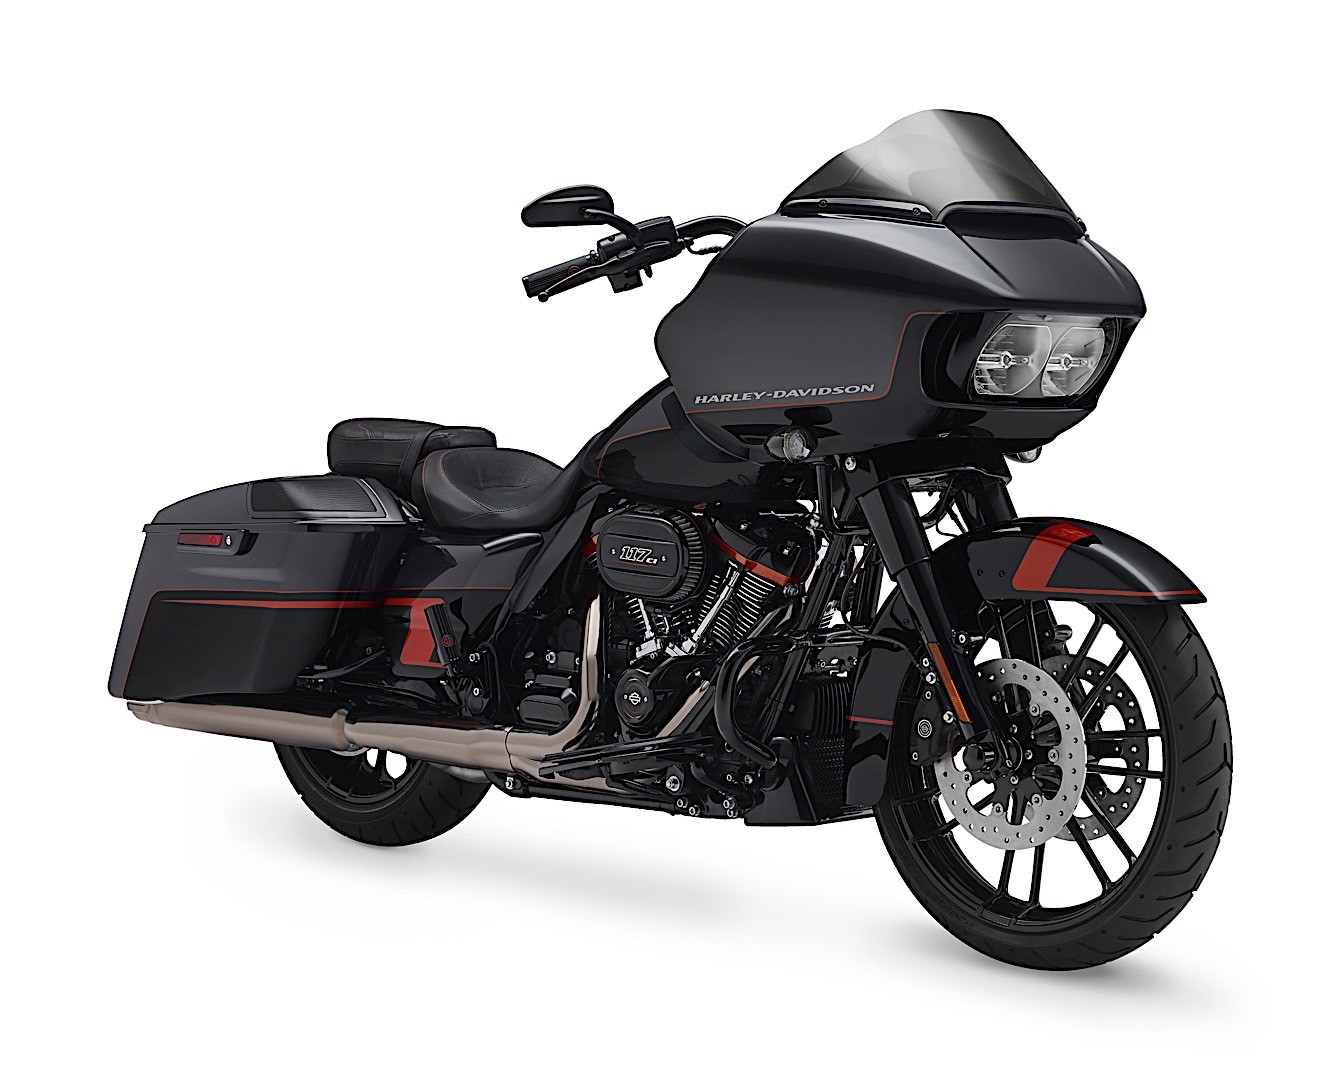 Harley-Davidson, Inc. (HOG) Holdings Decreased by Vanguard Group Inc